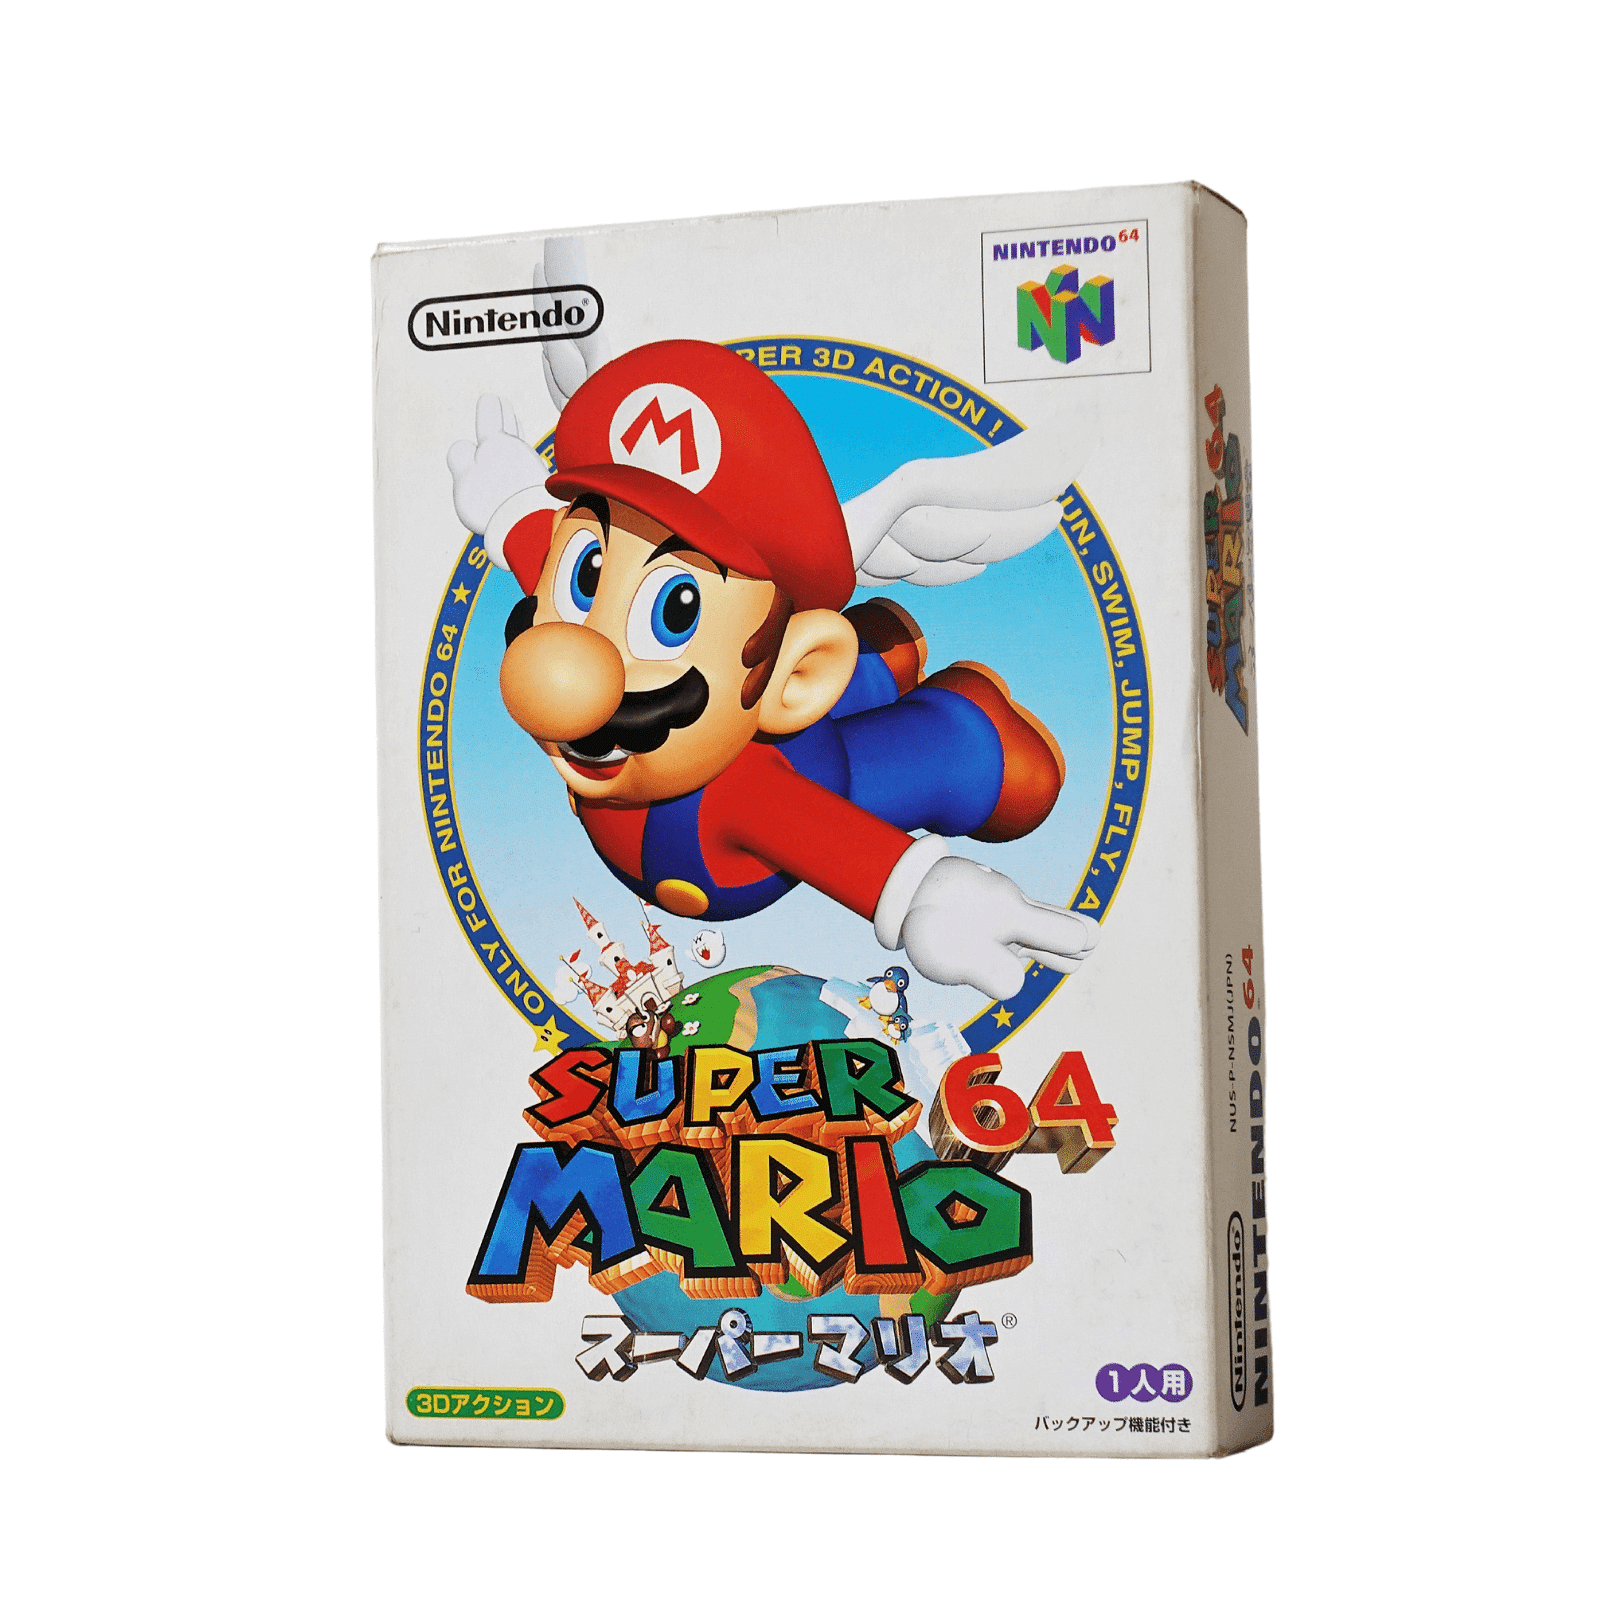 Super Mario 64 | Nintendo 64 ChitoroShop